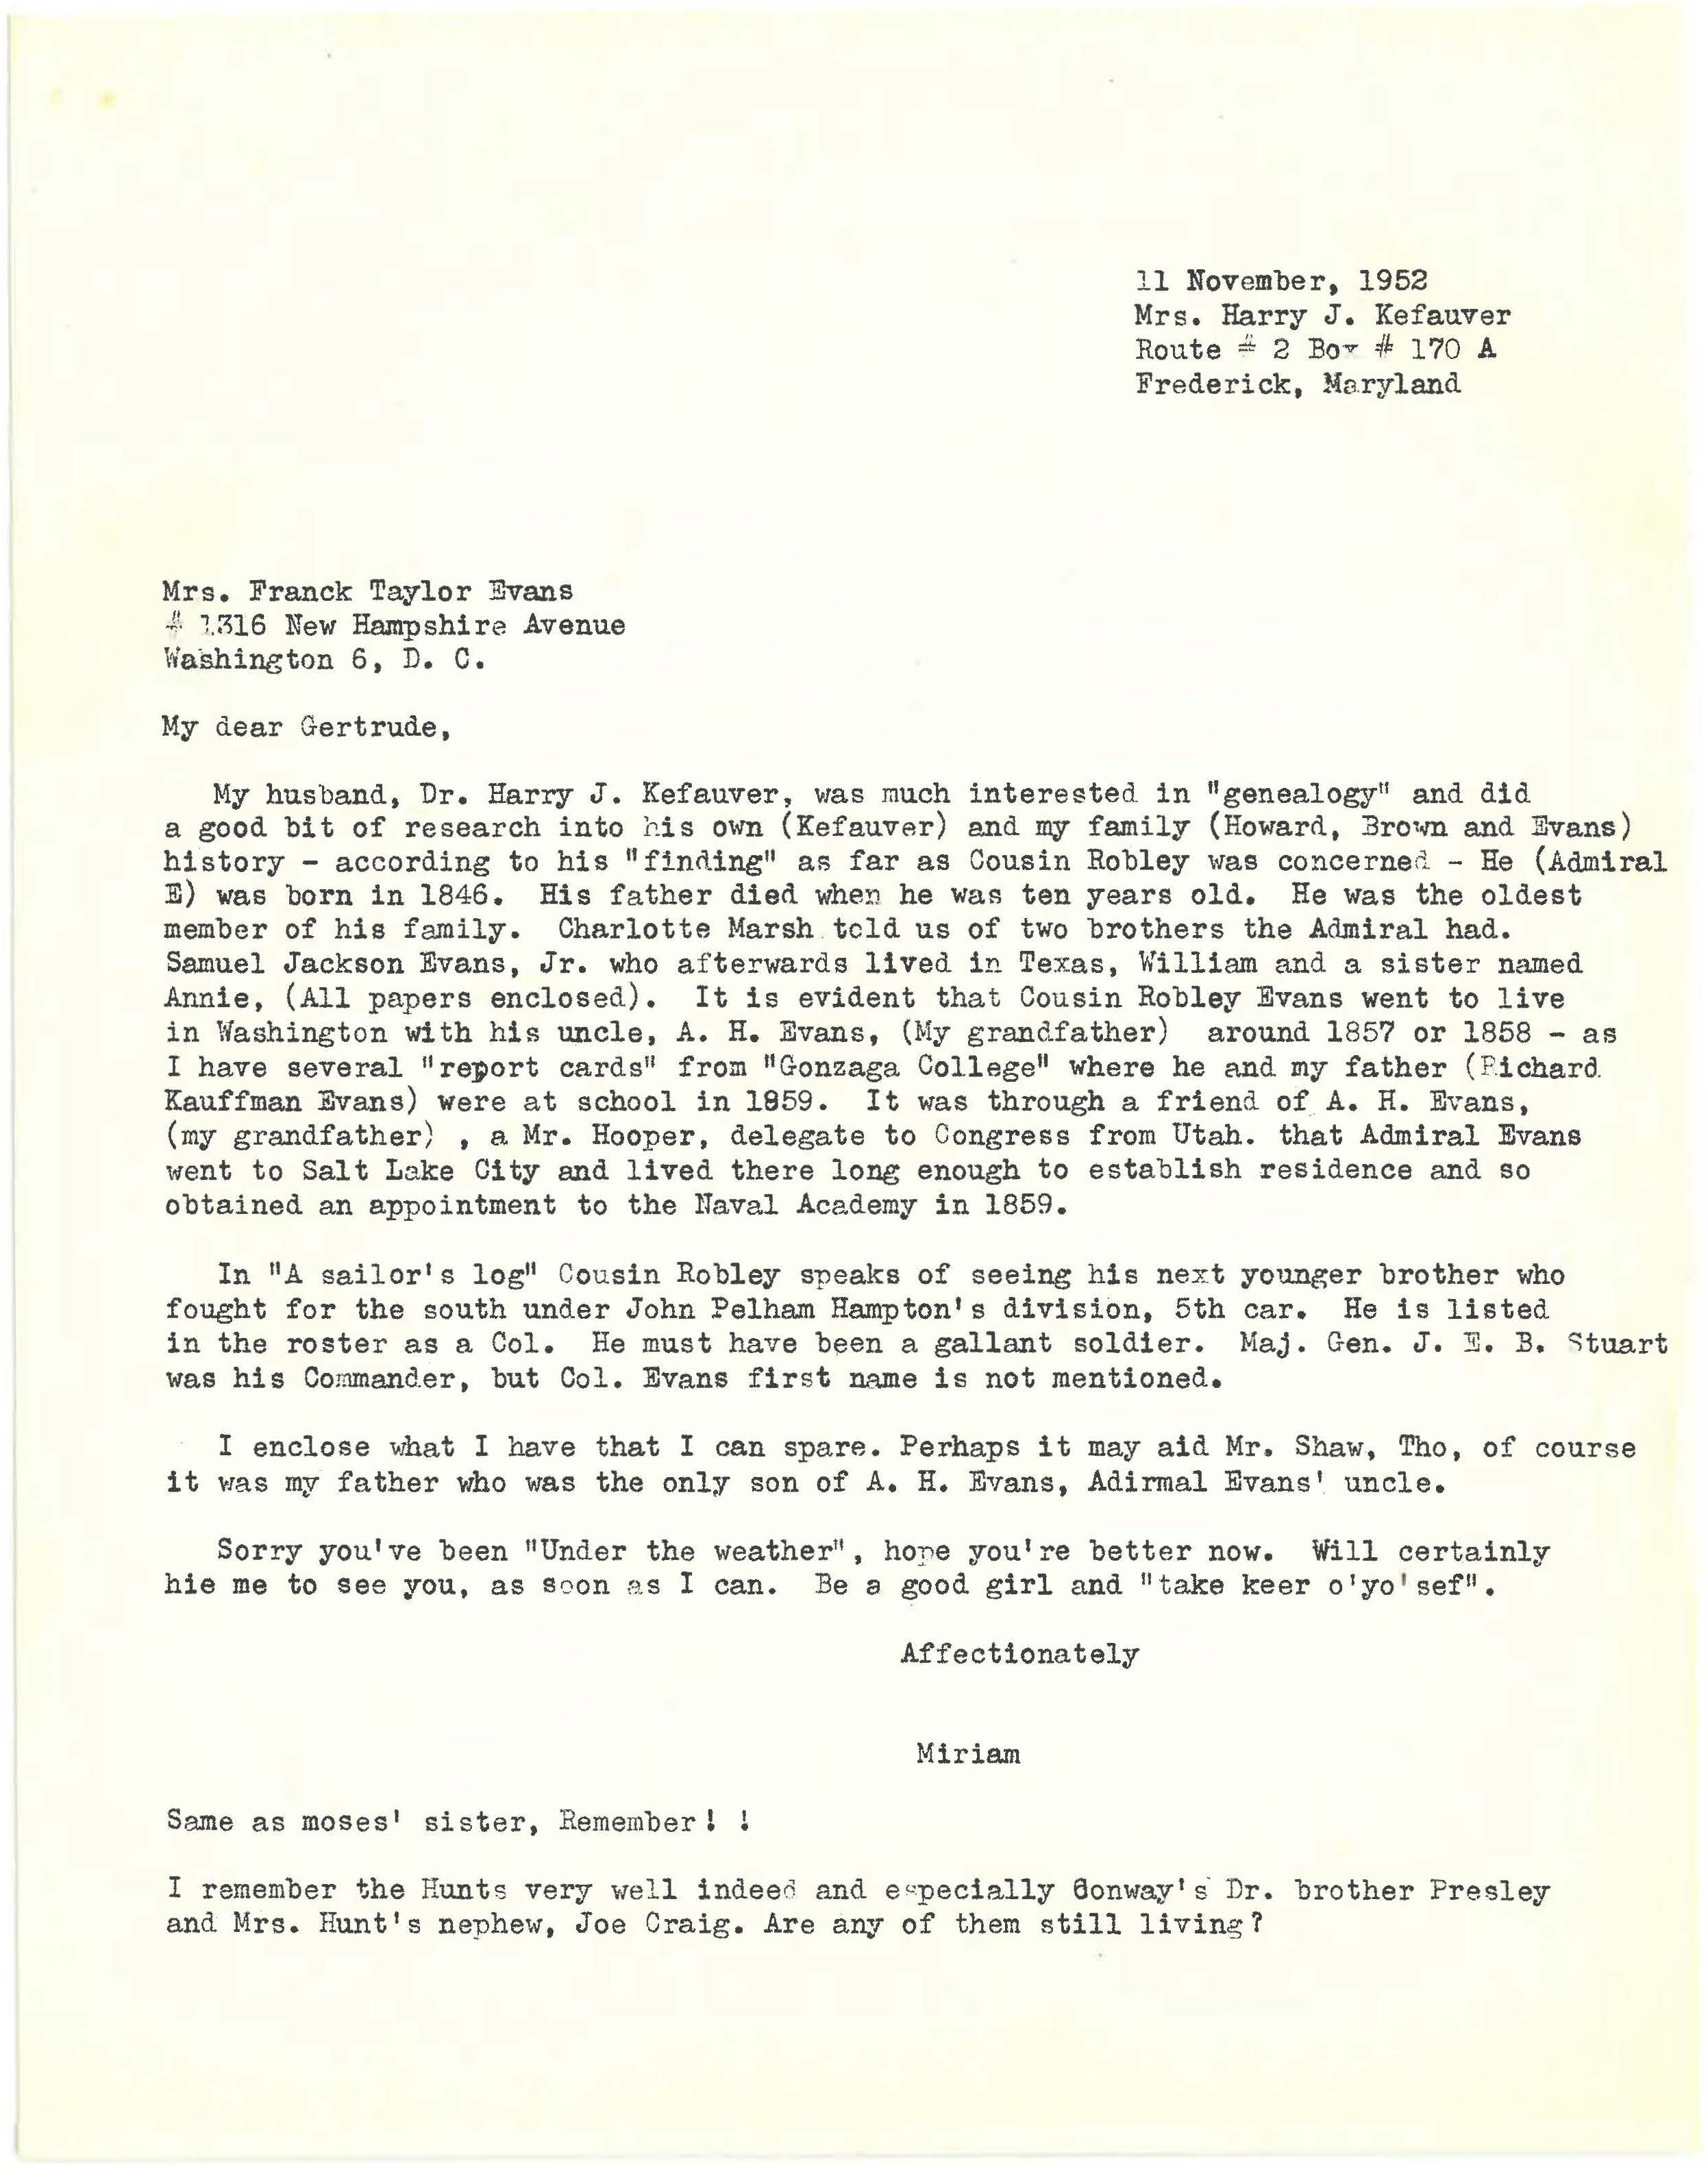 Miriam Kefauver letter to Gertrude Evans